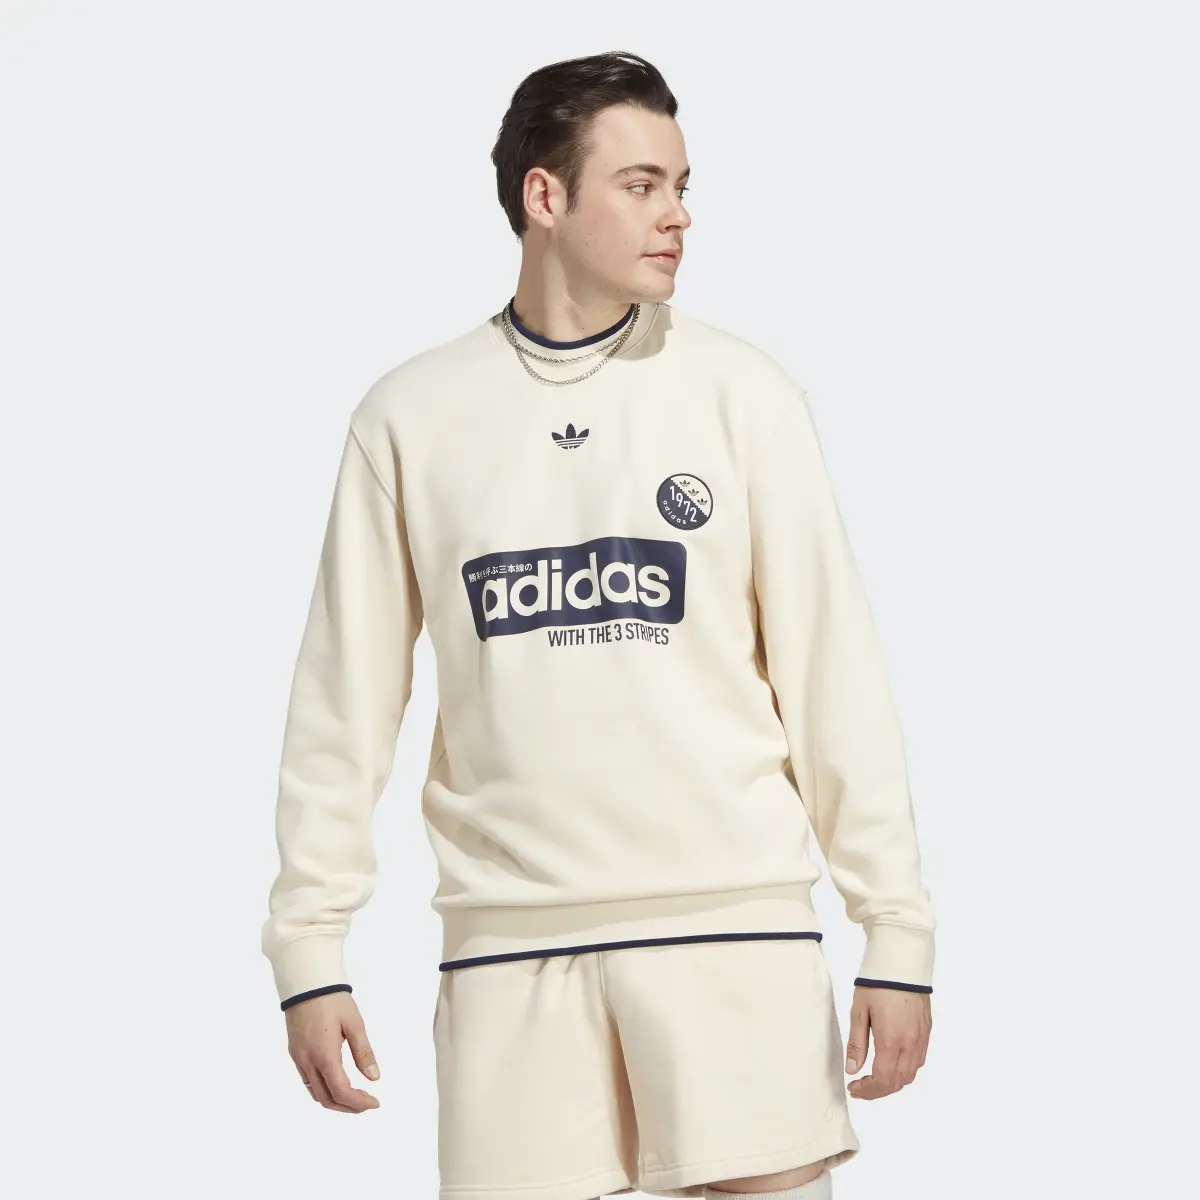 Adidas Sweatshirt Blokepop. 2